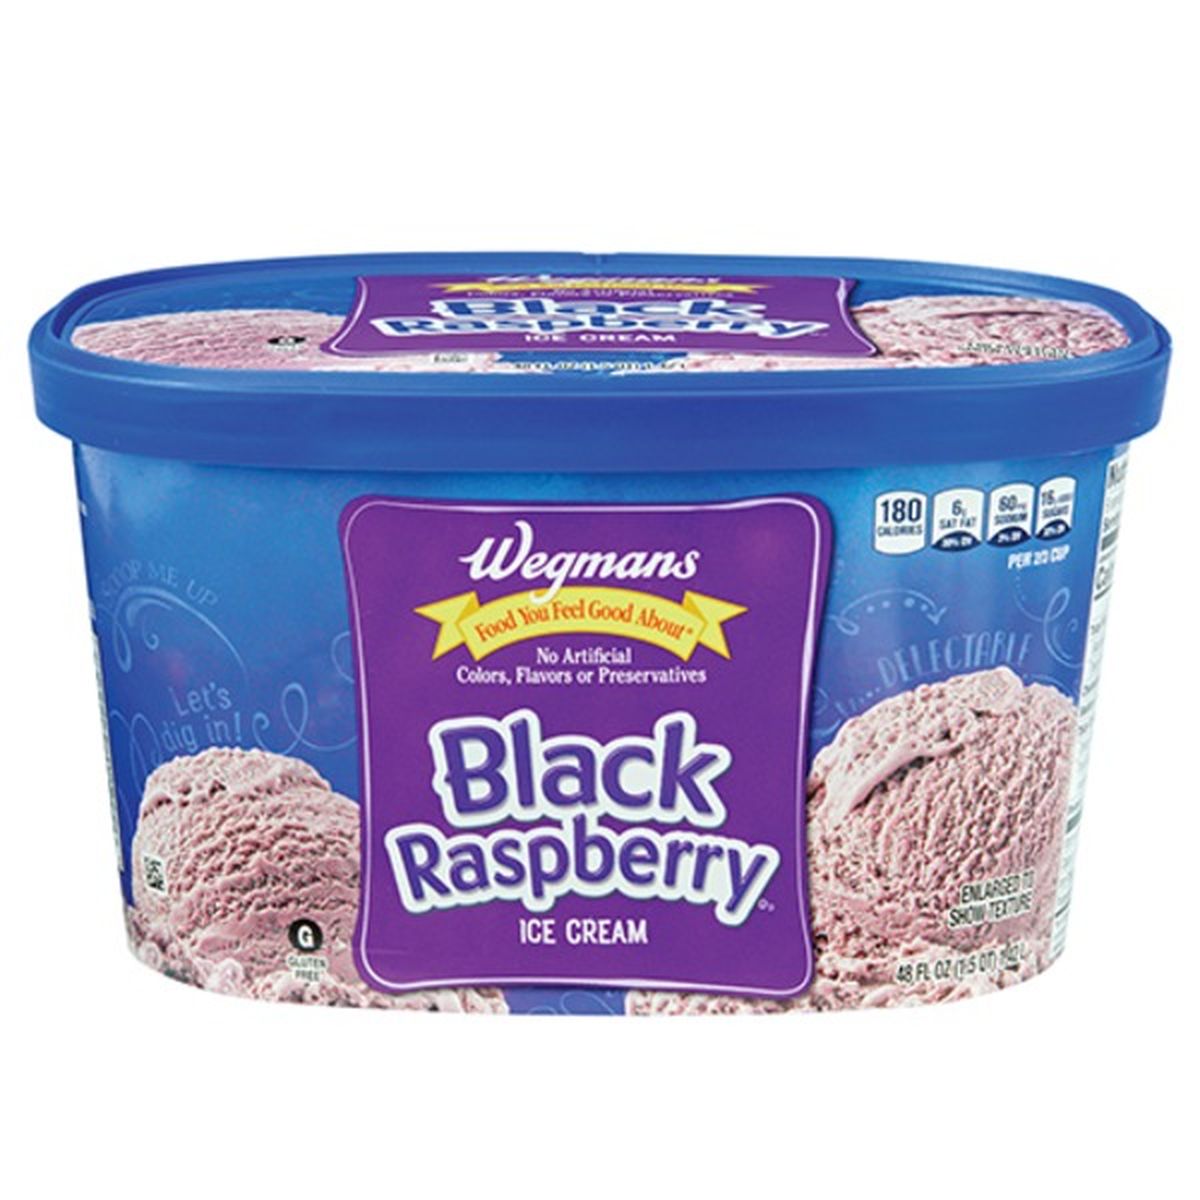 Calories in Wegmans Black Raspberry Ice Cream